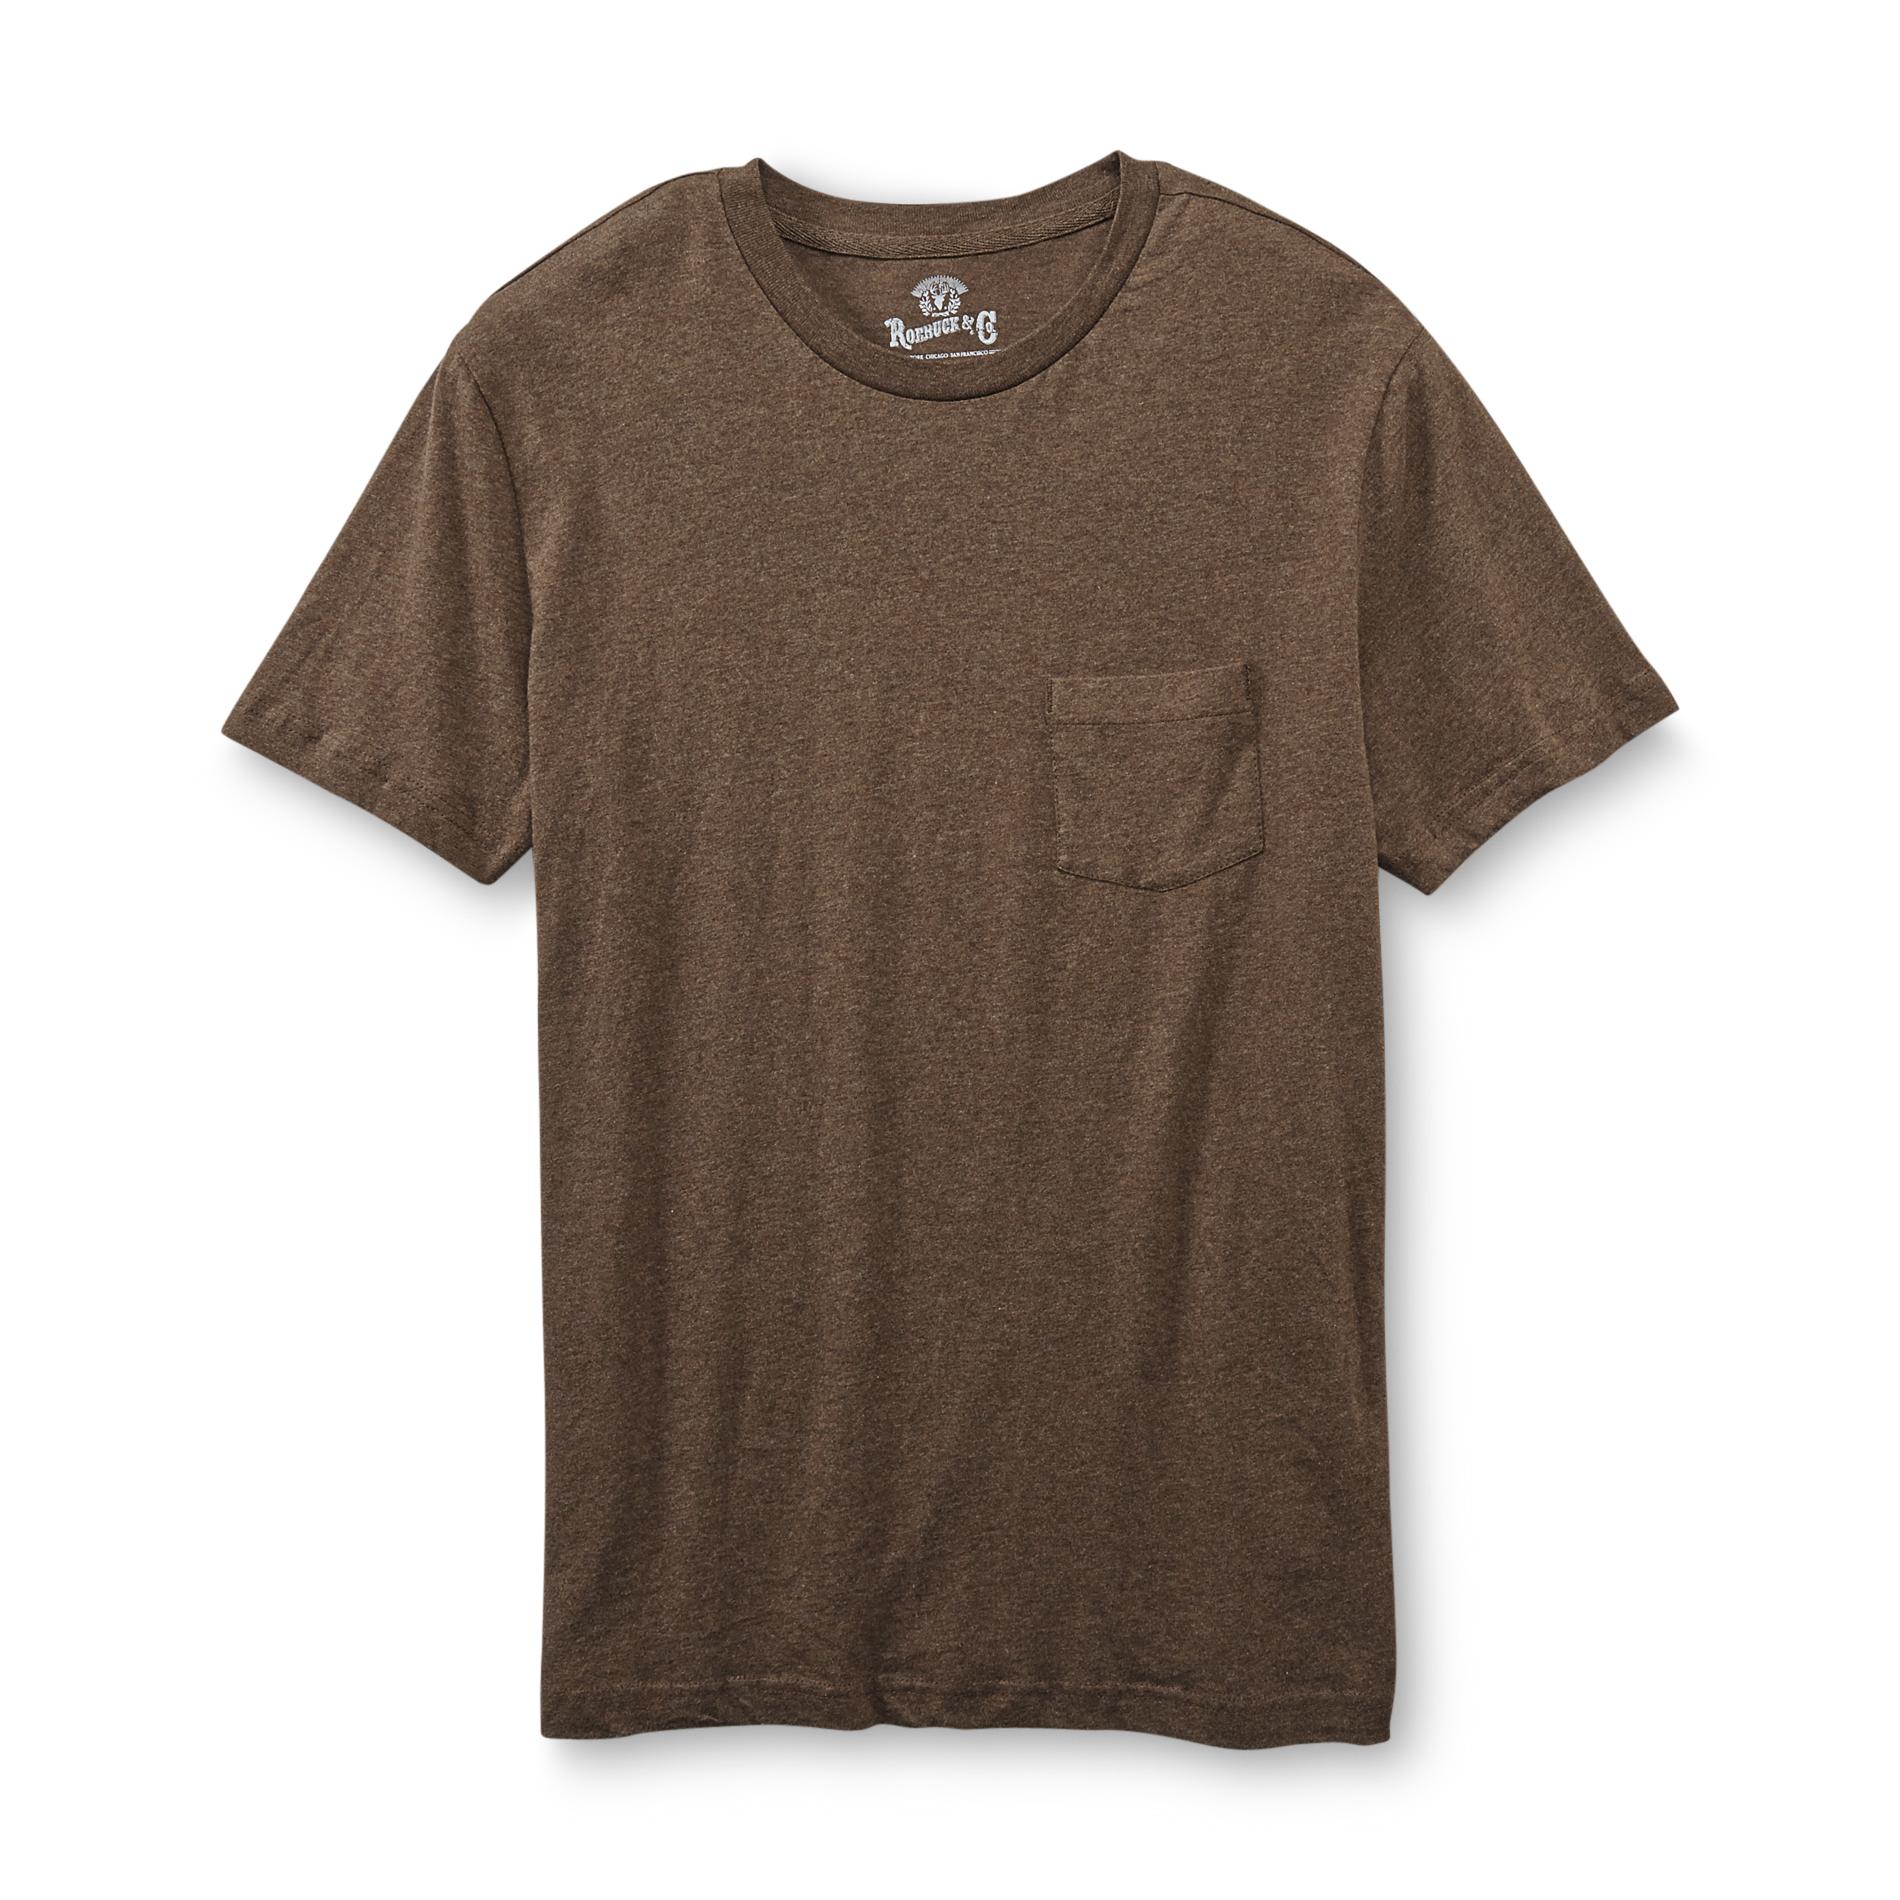 Roebuck & Co. Young Men's Pocket T-Shirt - Heathered